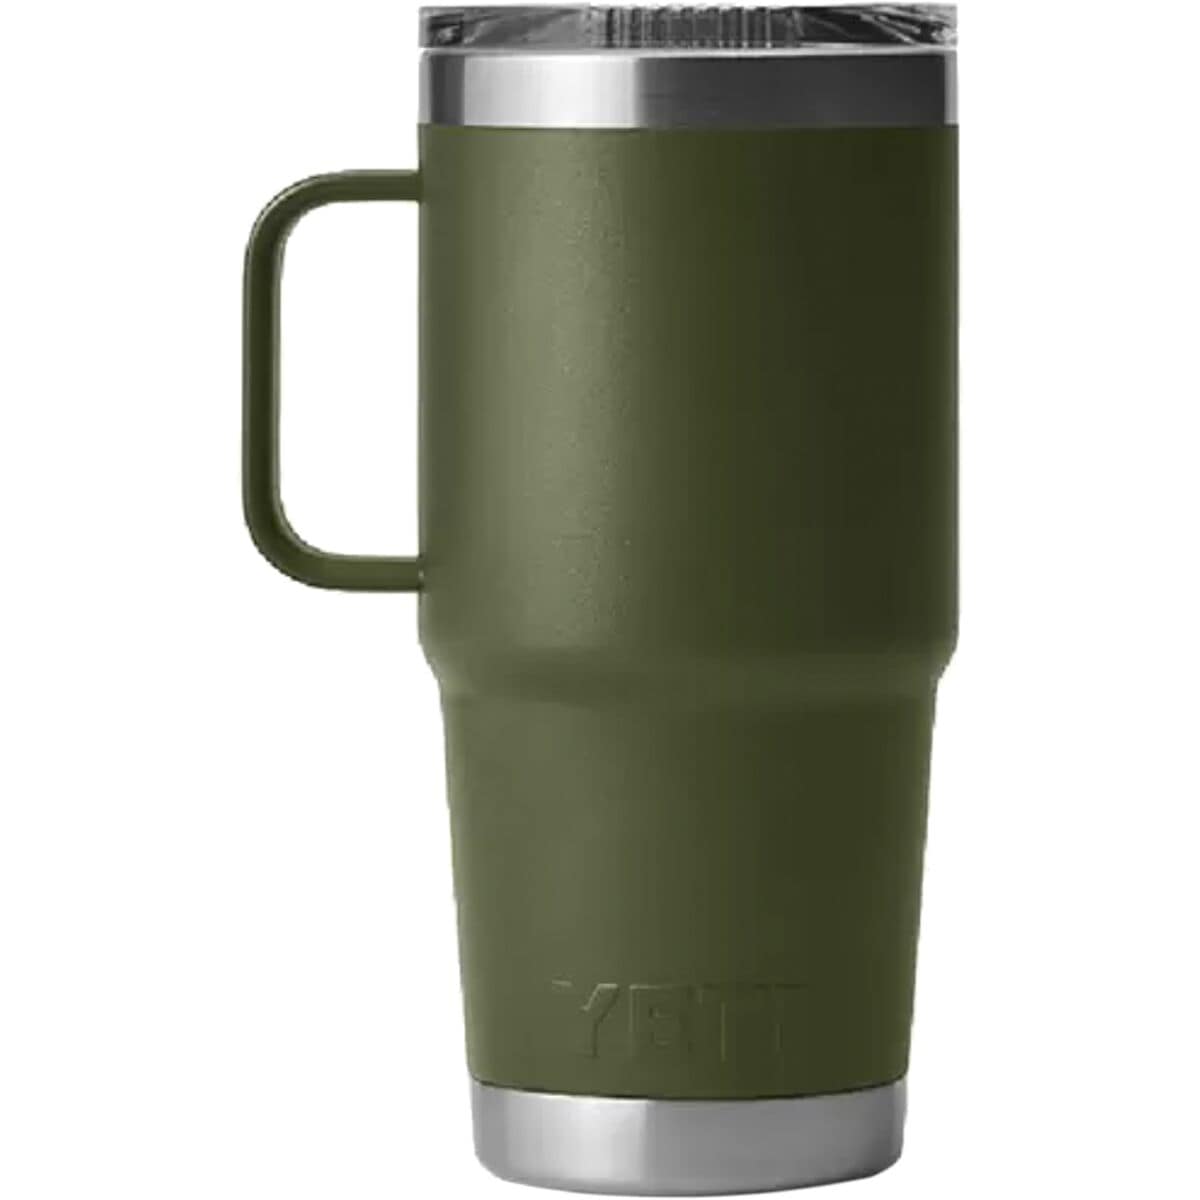 YETI Rambler 20 oz Travel Mug - Camp Green